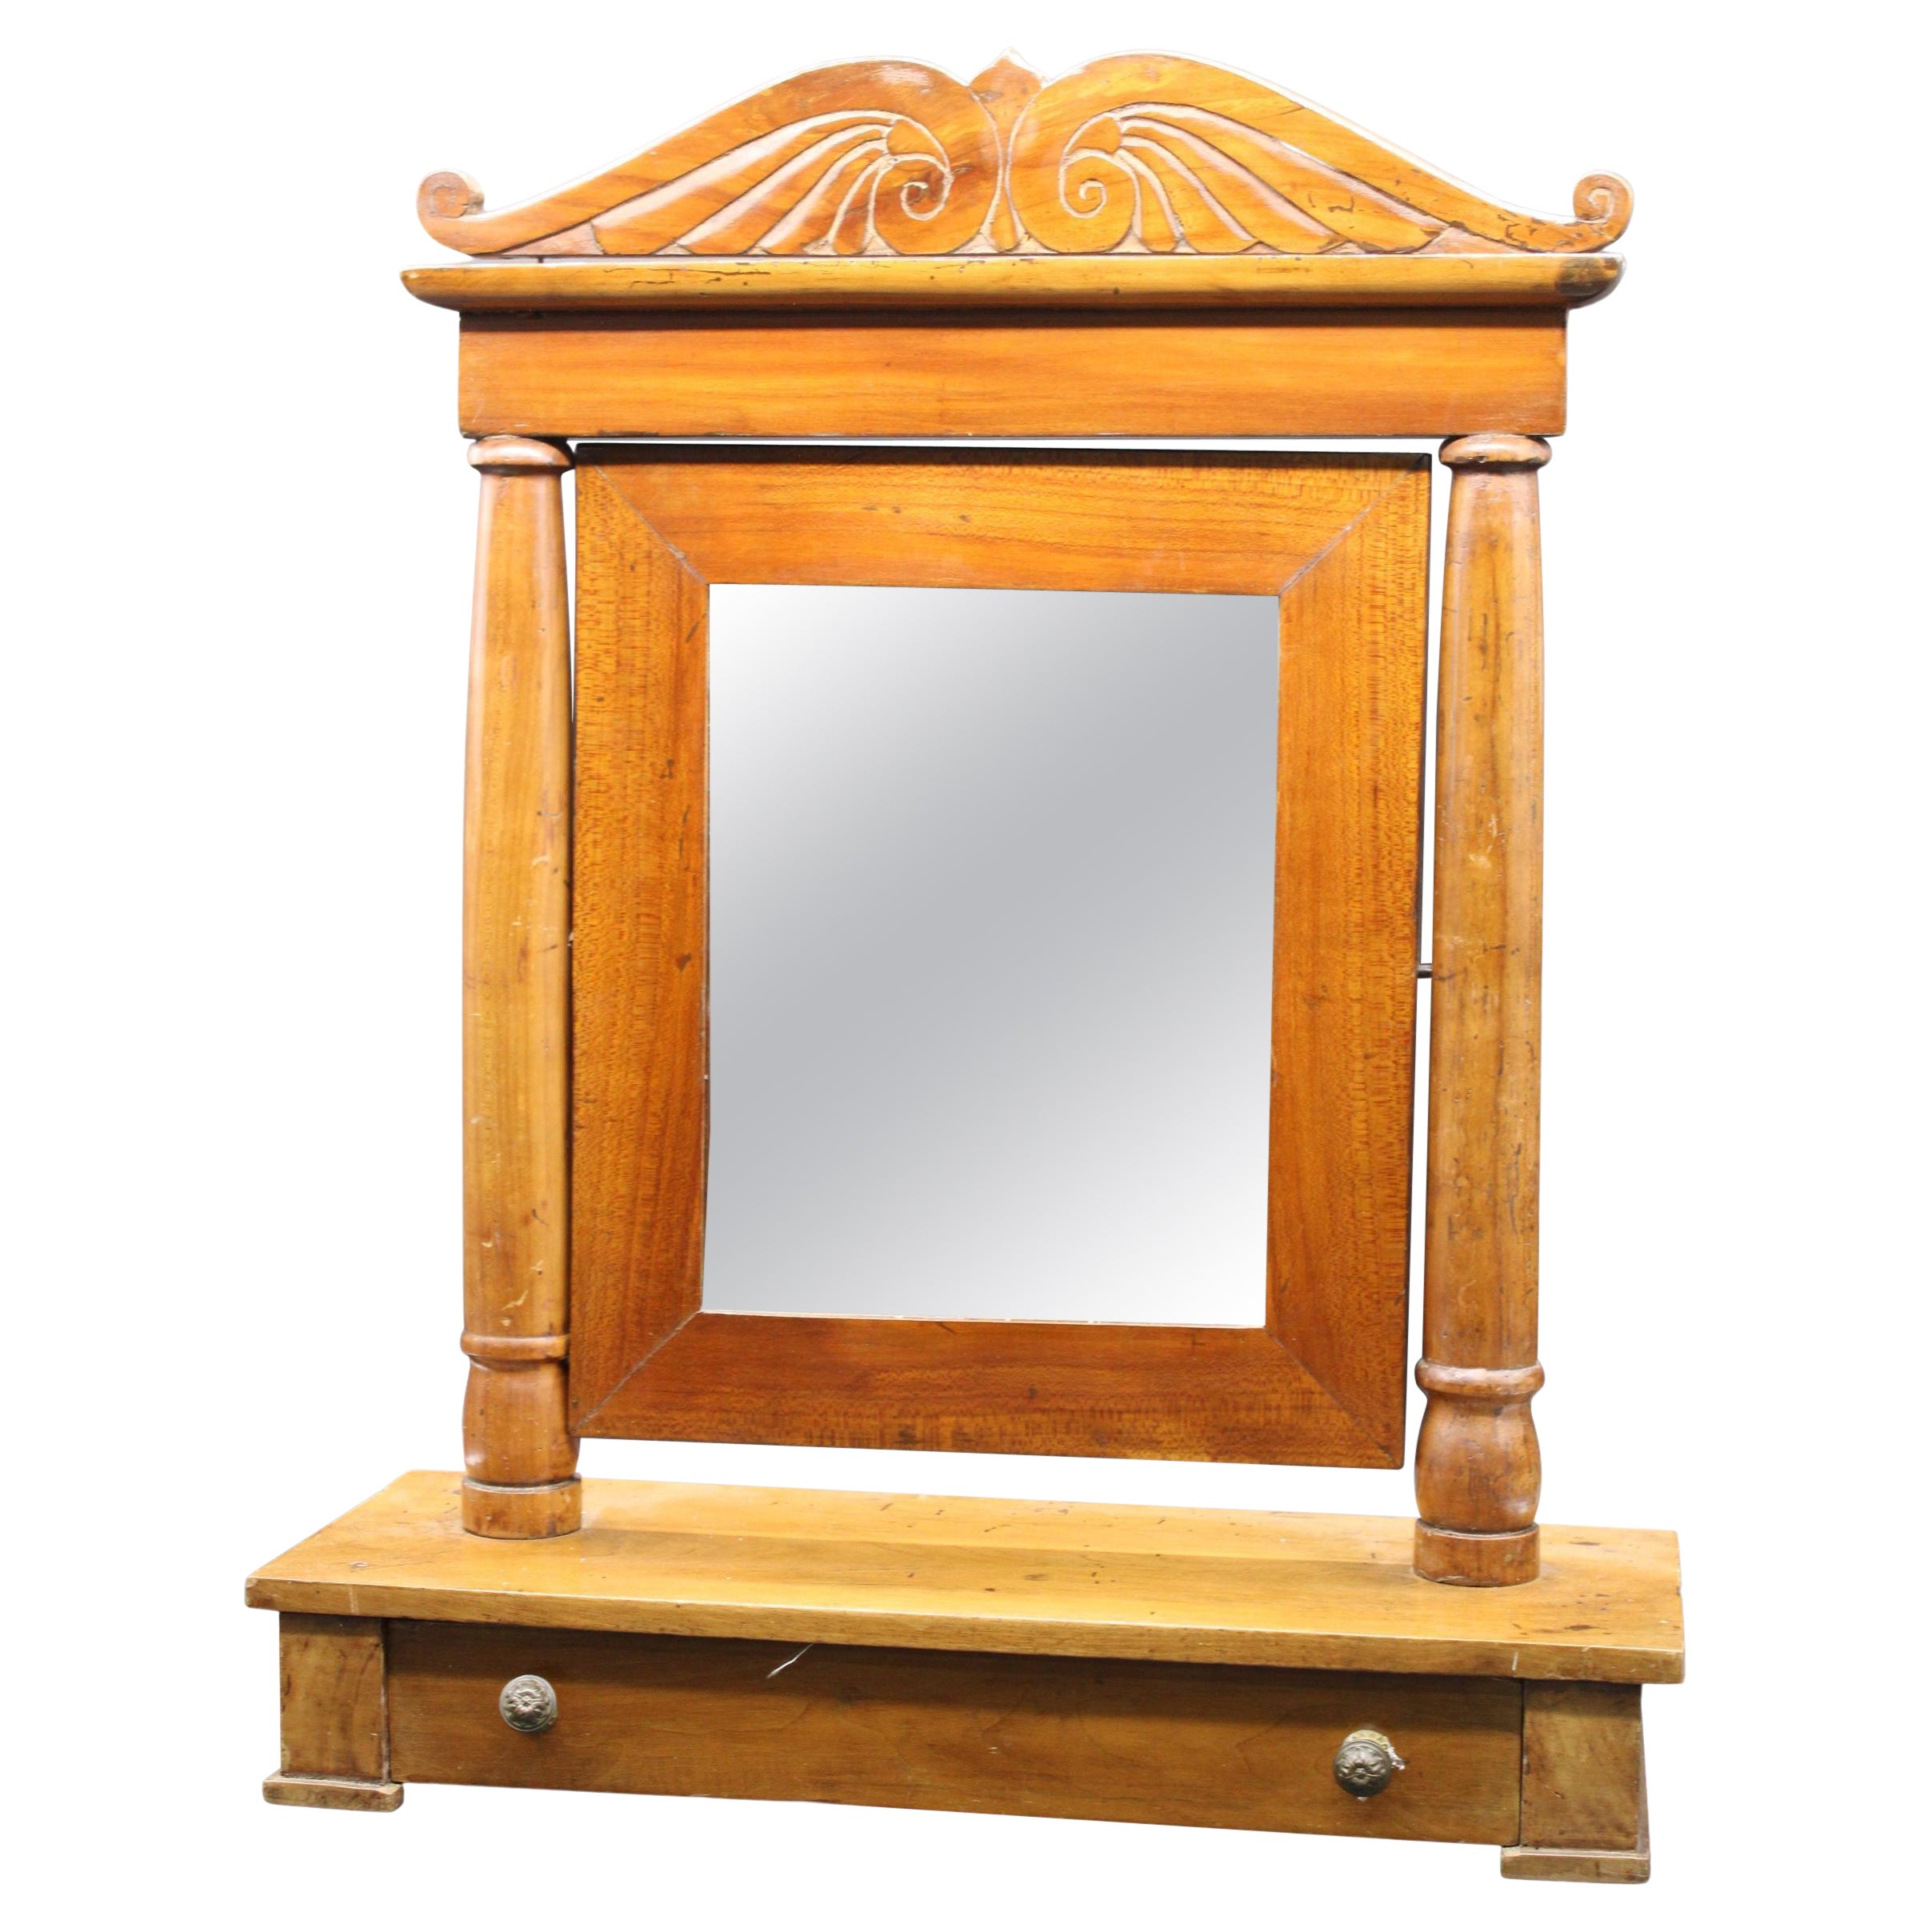 19th Century Table Mirror, Cherry Wood